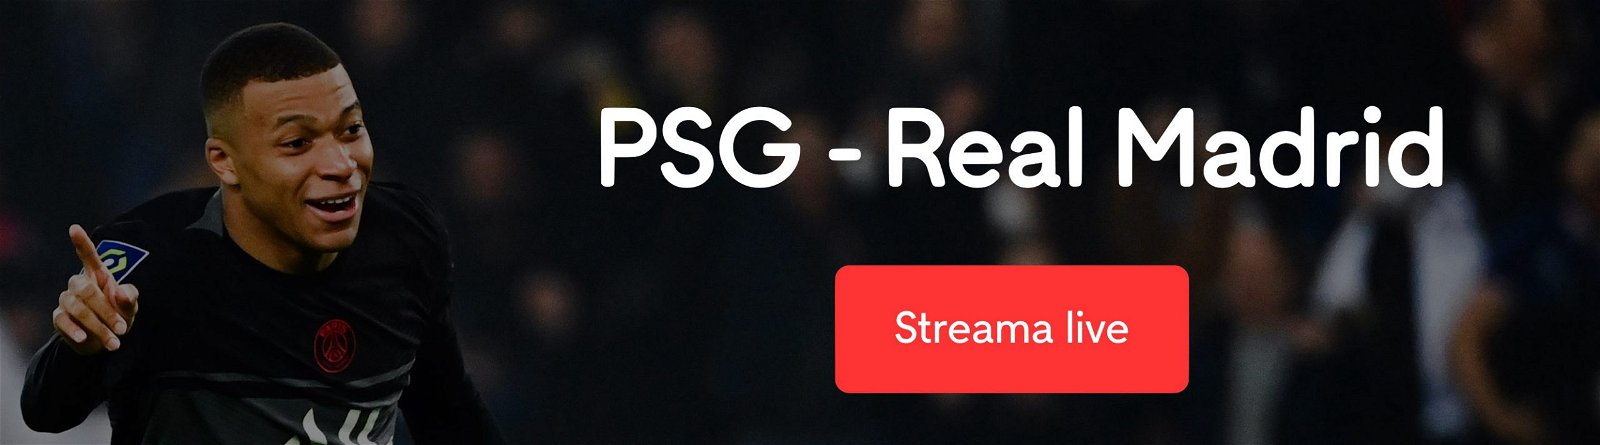 Odds PSG Real Madrid - bästa oddsen PSG - Madrid Champions League